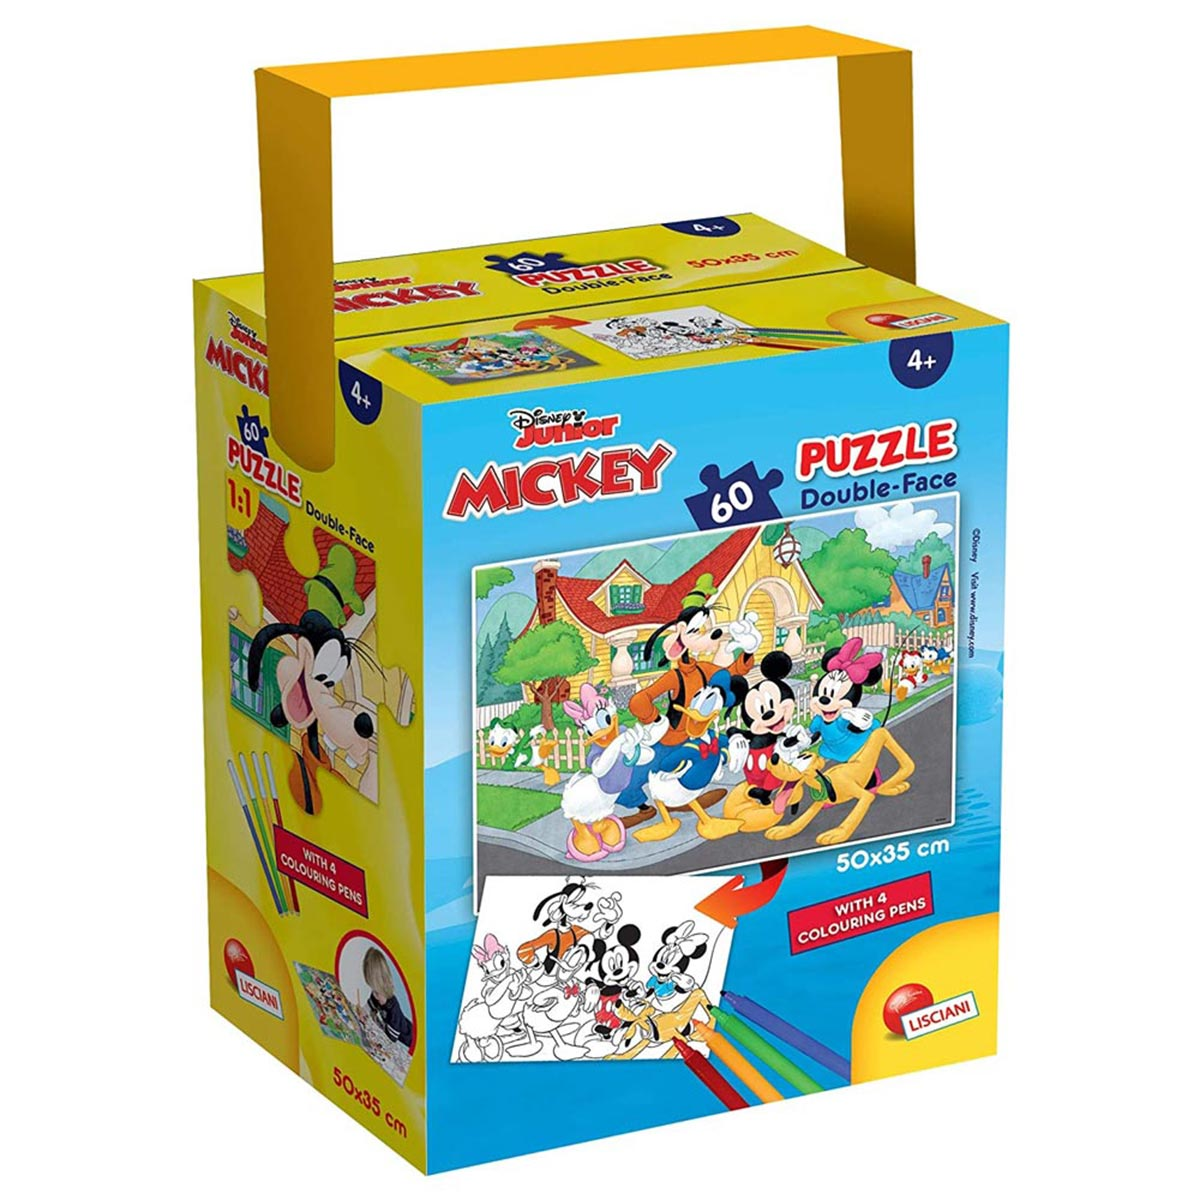 MICKEY MOUSE Ausmal-Puzzle in Tragebox Lisciani von Teile Puzzle 60